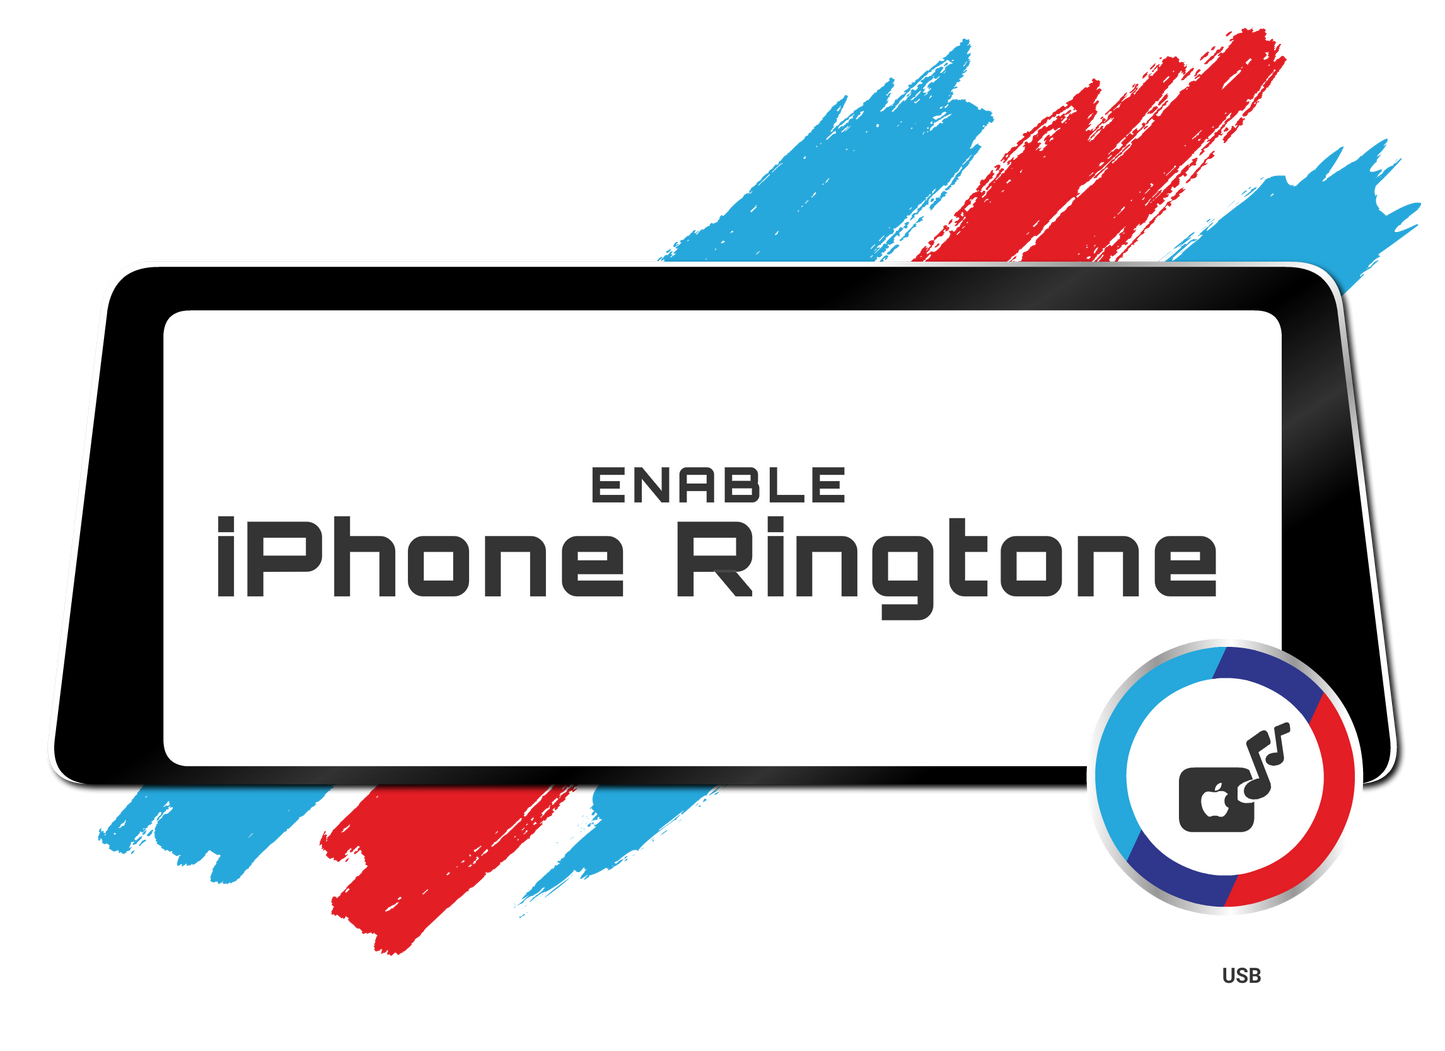 personal iphone ringtone notification sound on bmw idrive evo unit